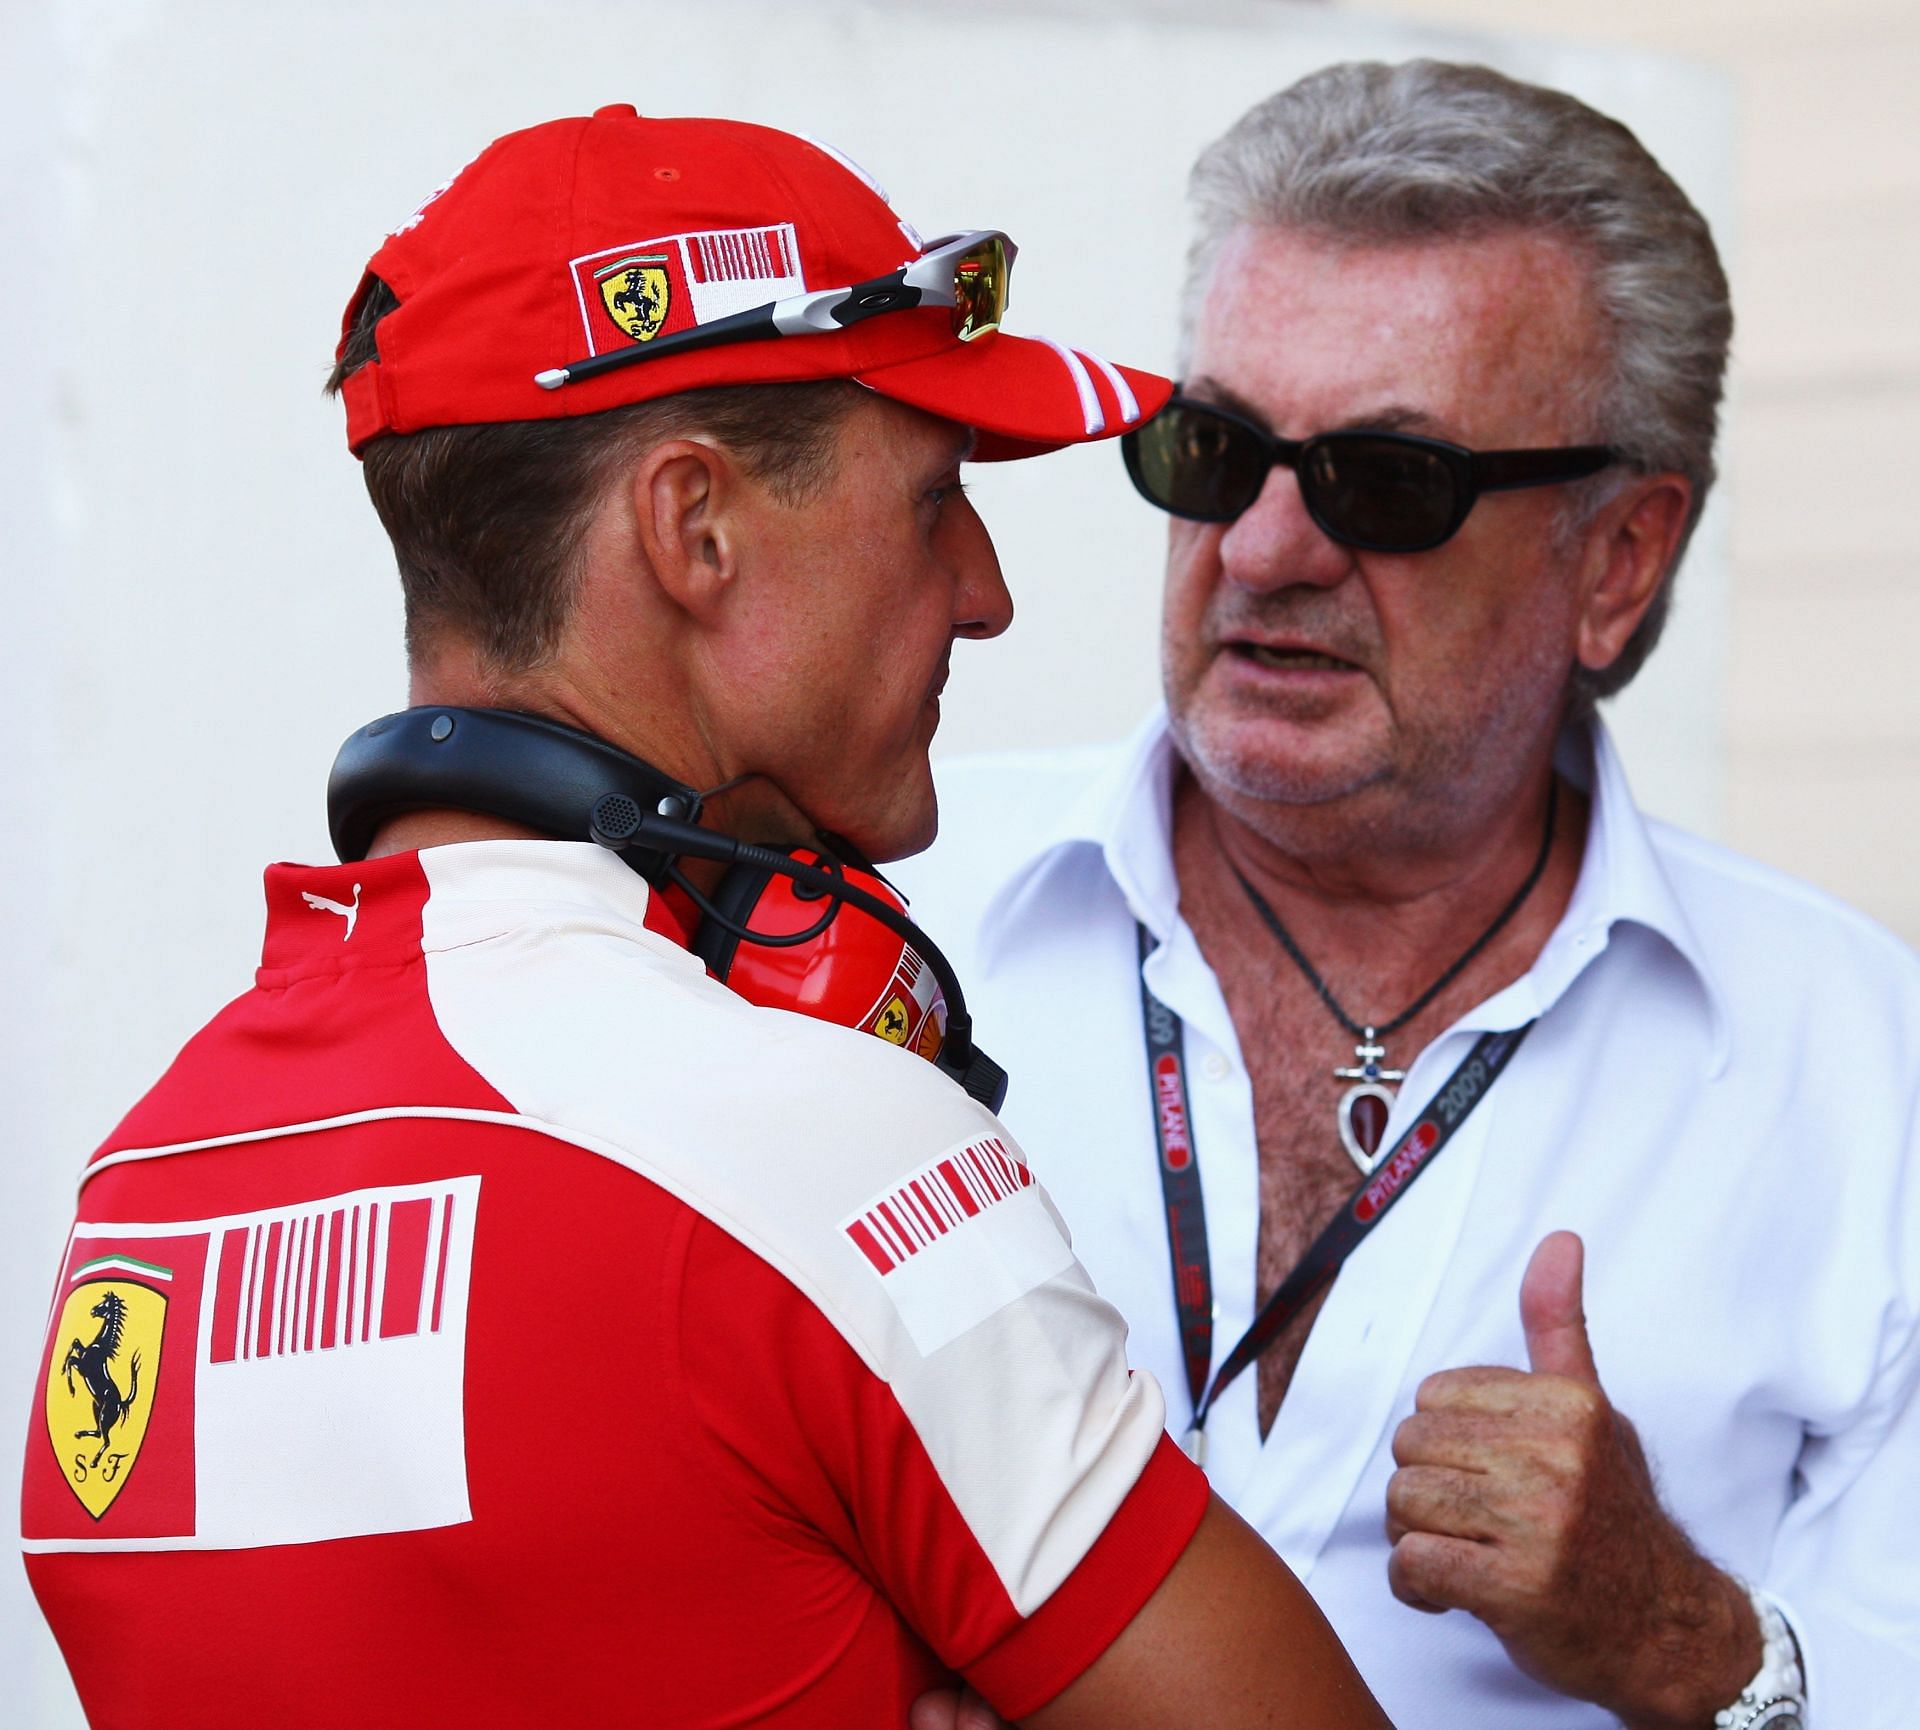 F1 Grand Prix of Europe - Qualifying - Michael Schumacher talks to Willi Weber.